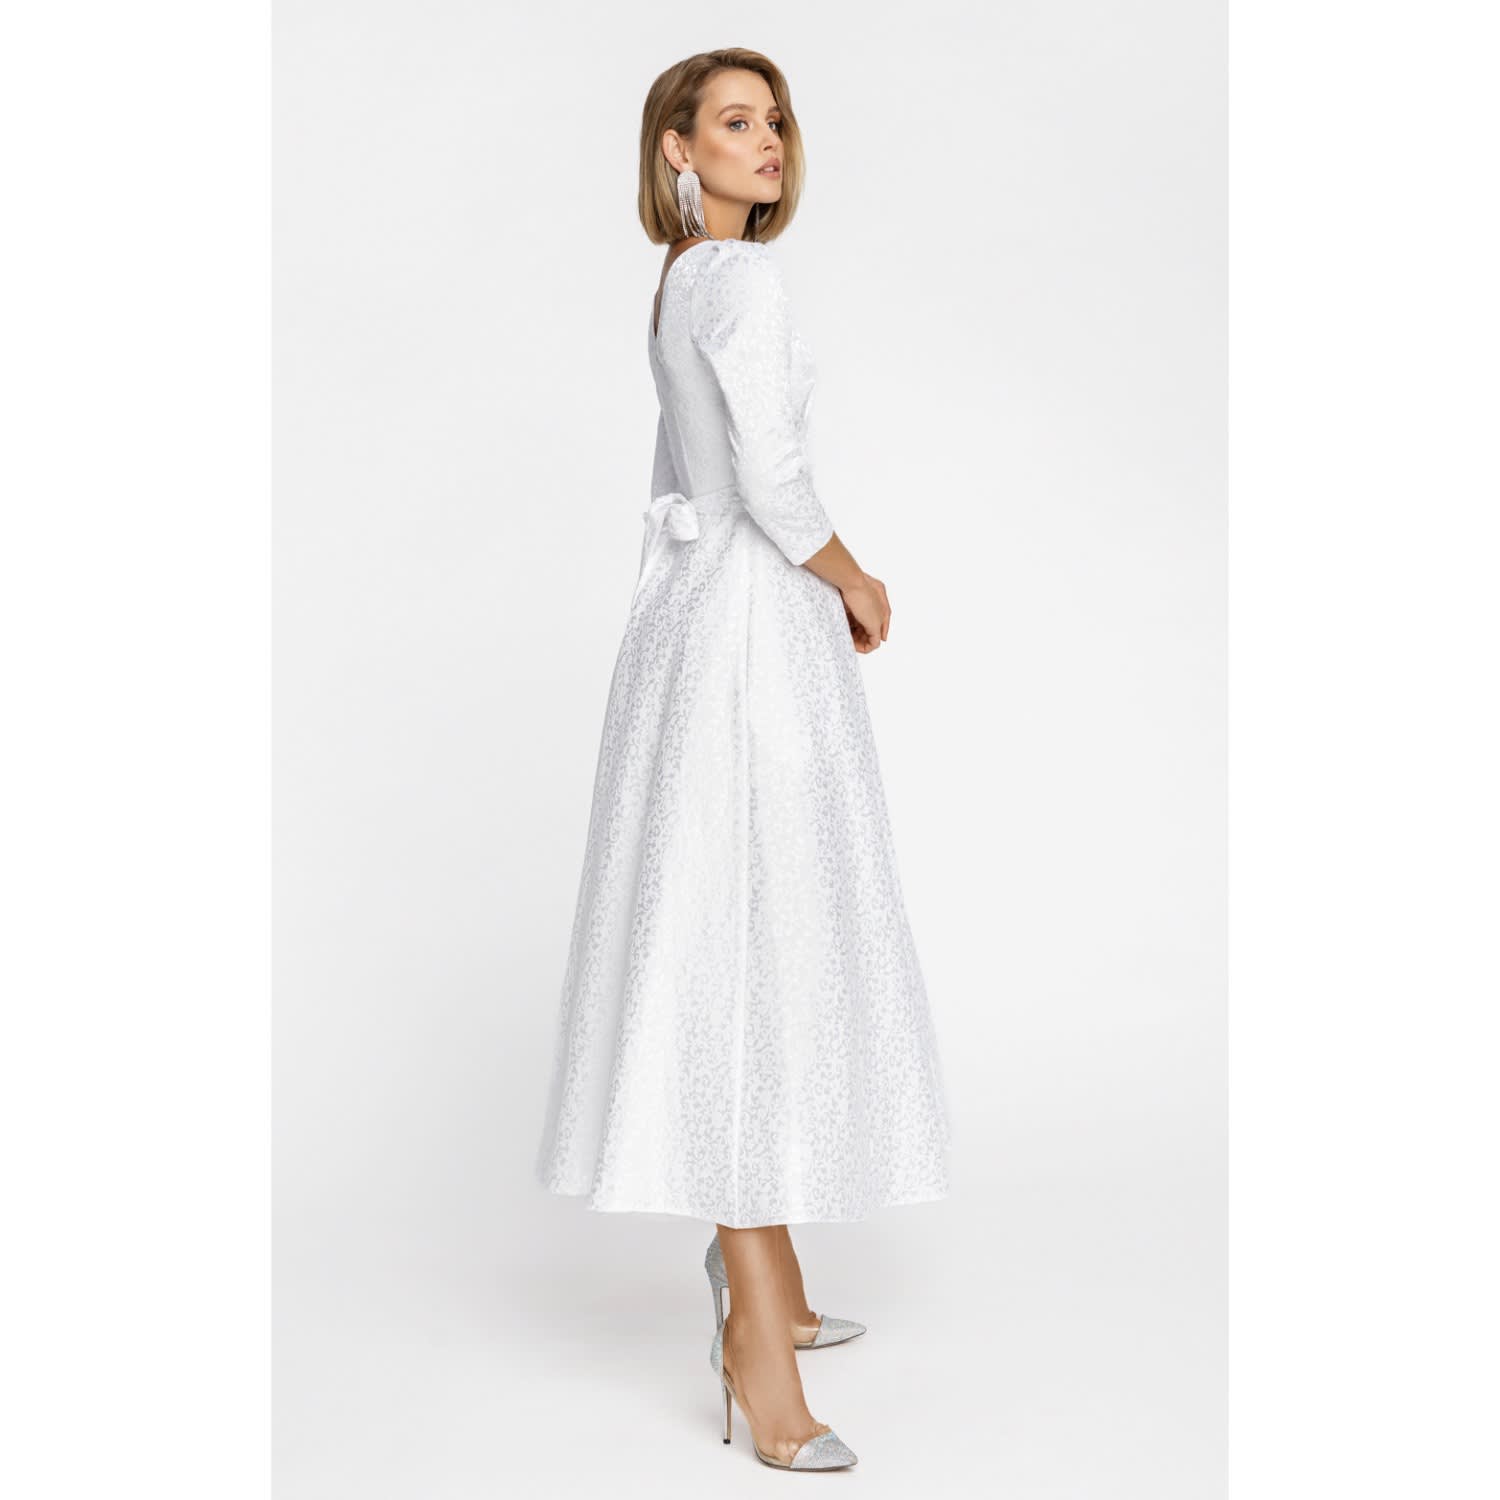 Jacquard Dress Alyzee White by MATSOUR'I